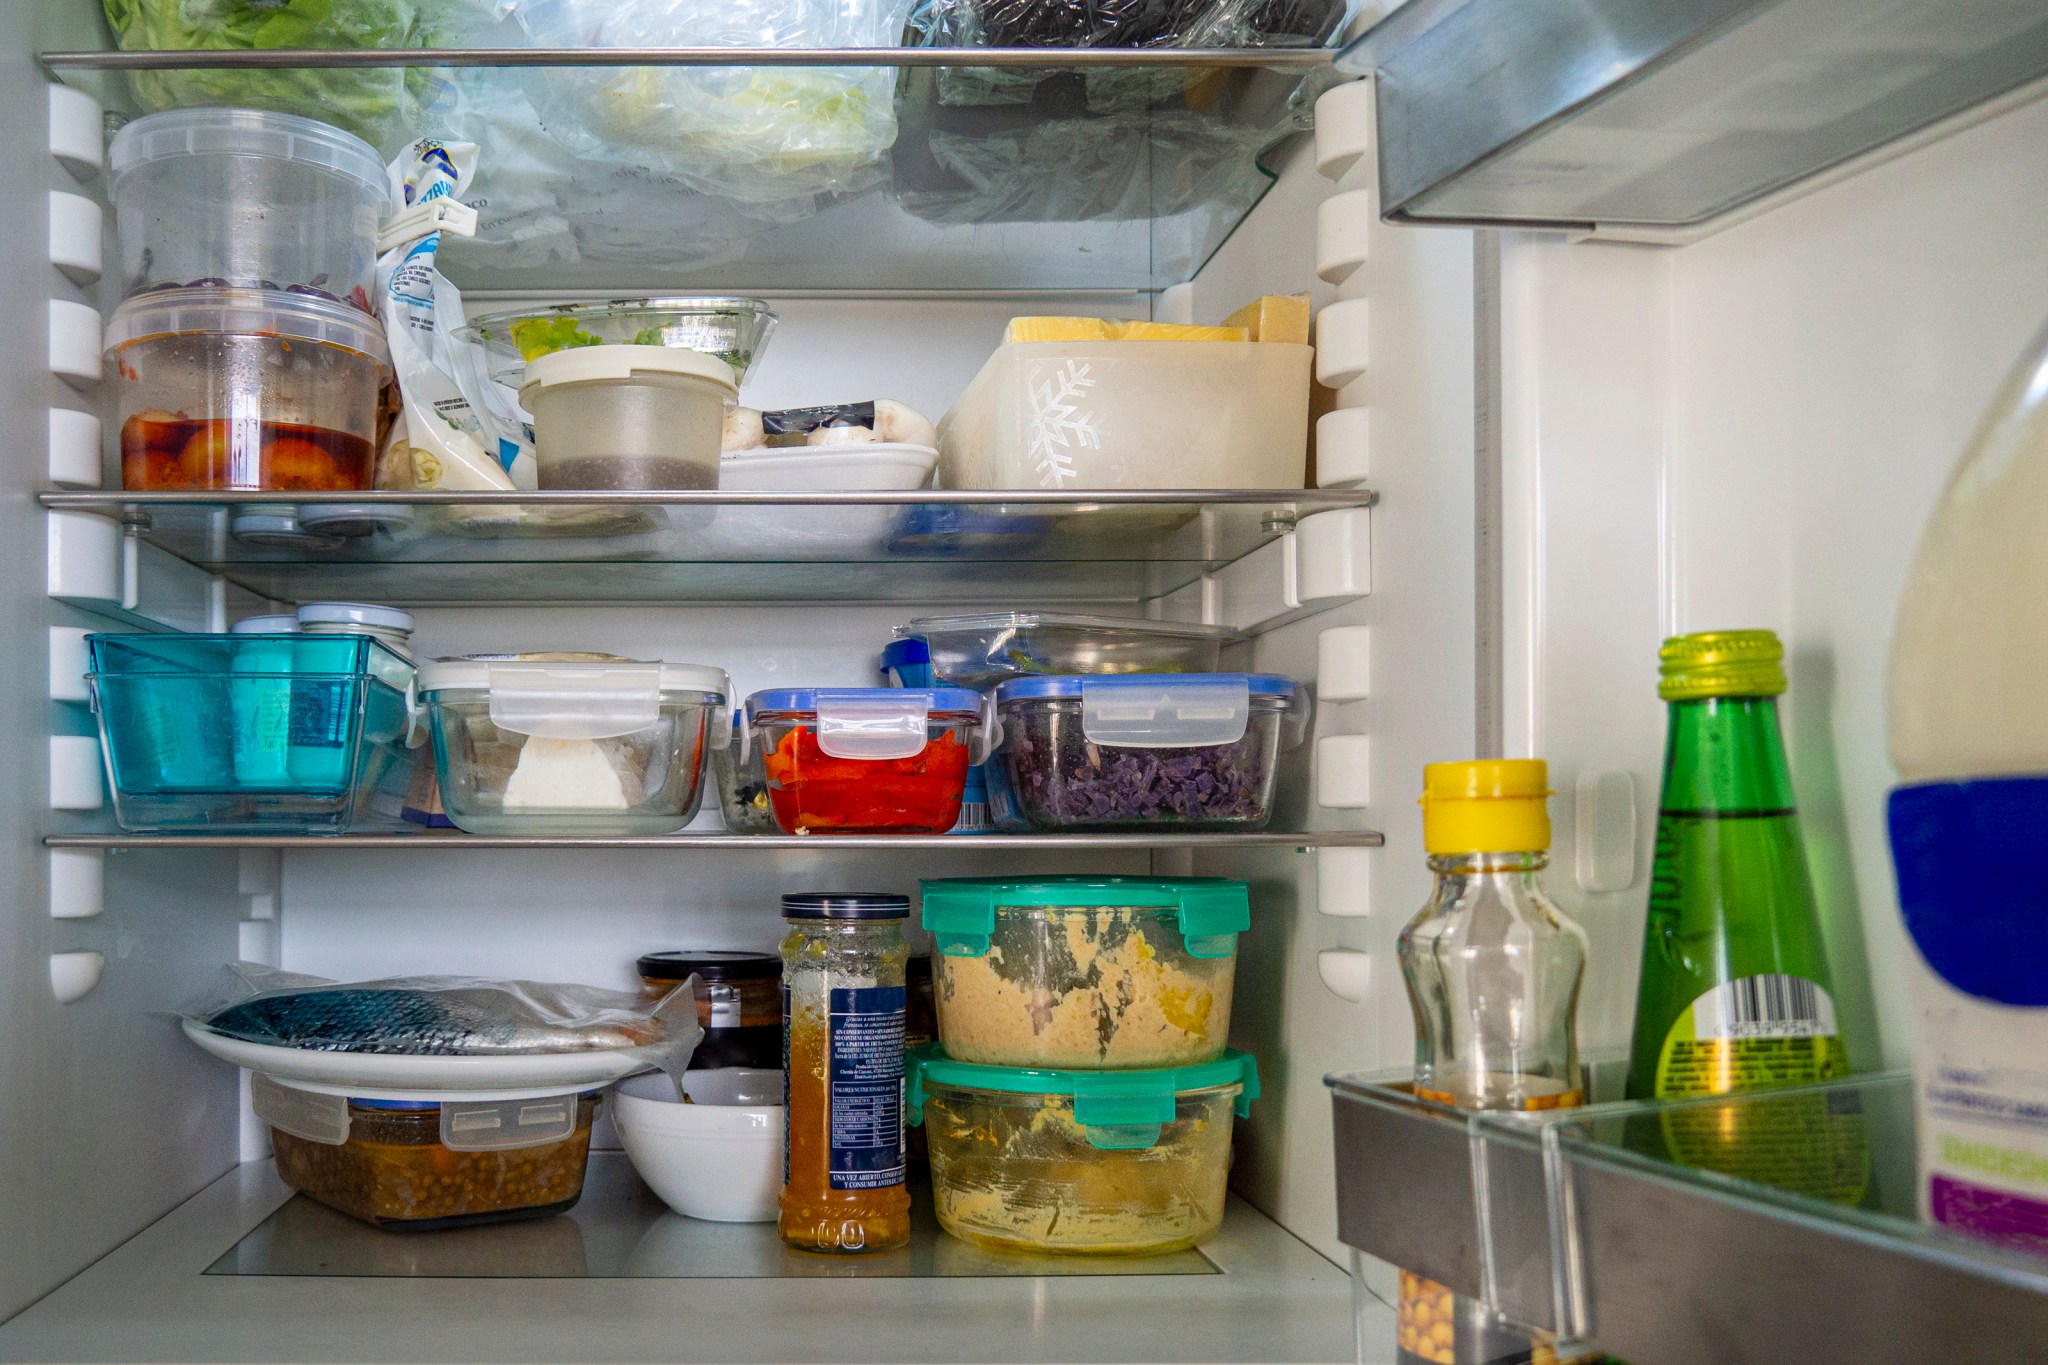 https://www.houselogic.com/wp-content/uploads/2022/11/how-to-organize-refrigerator-fridge.jpg?crop&resize=2048%2C1365